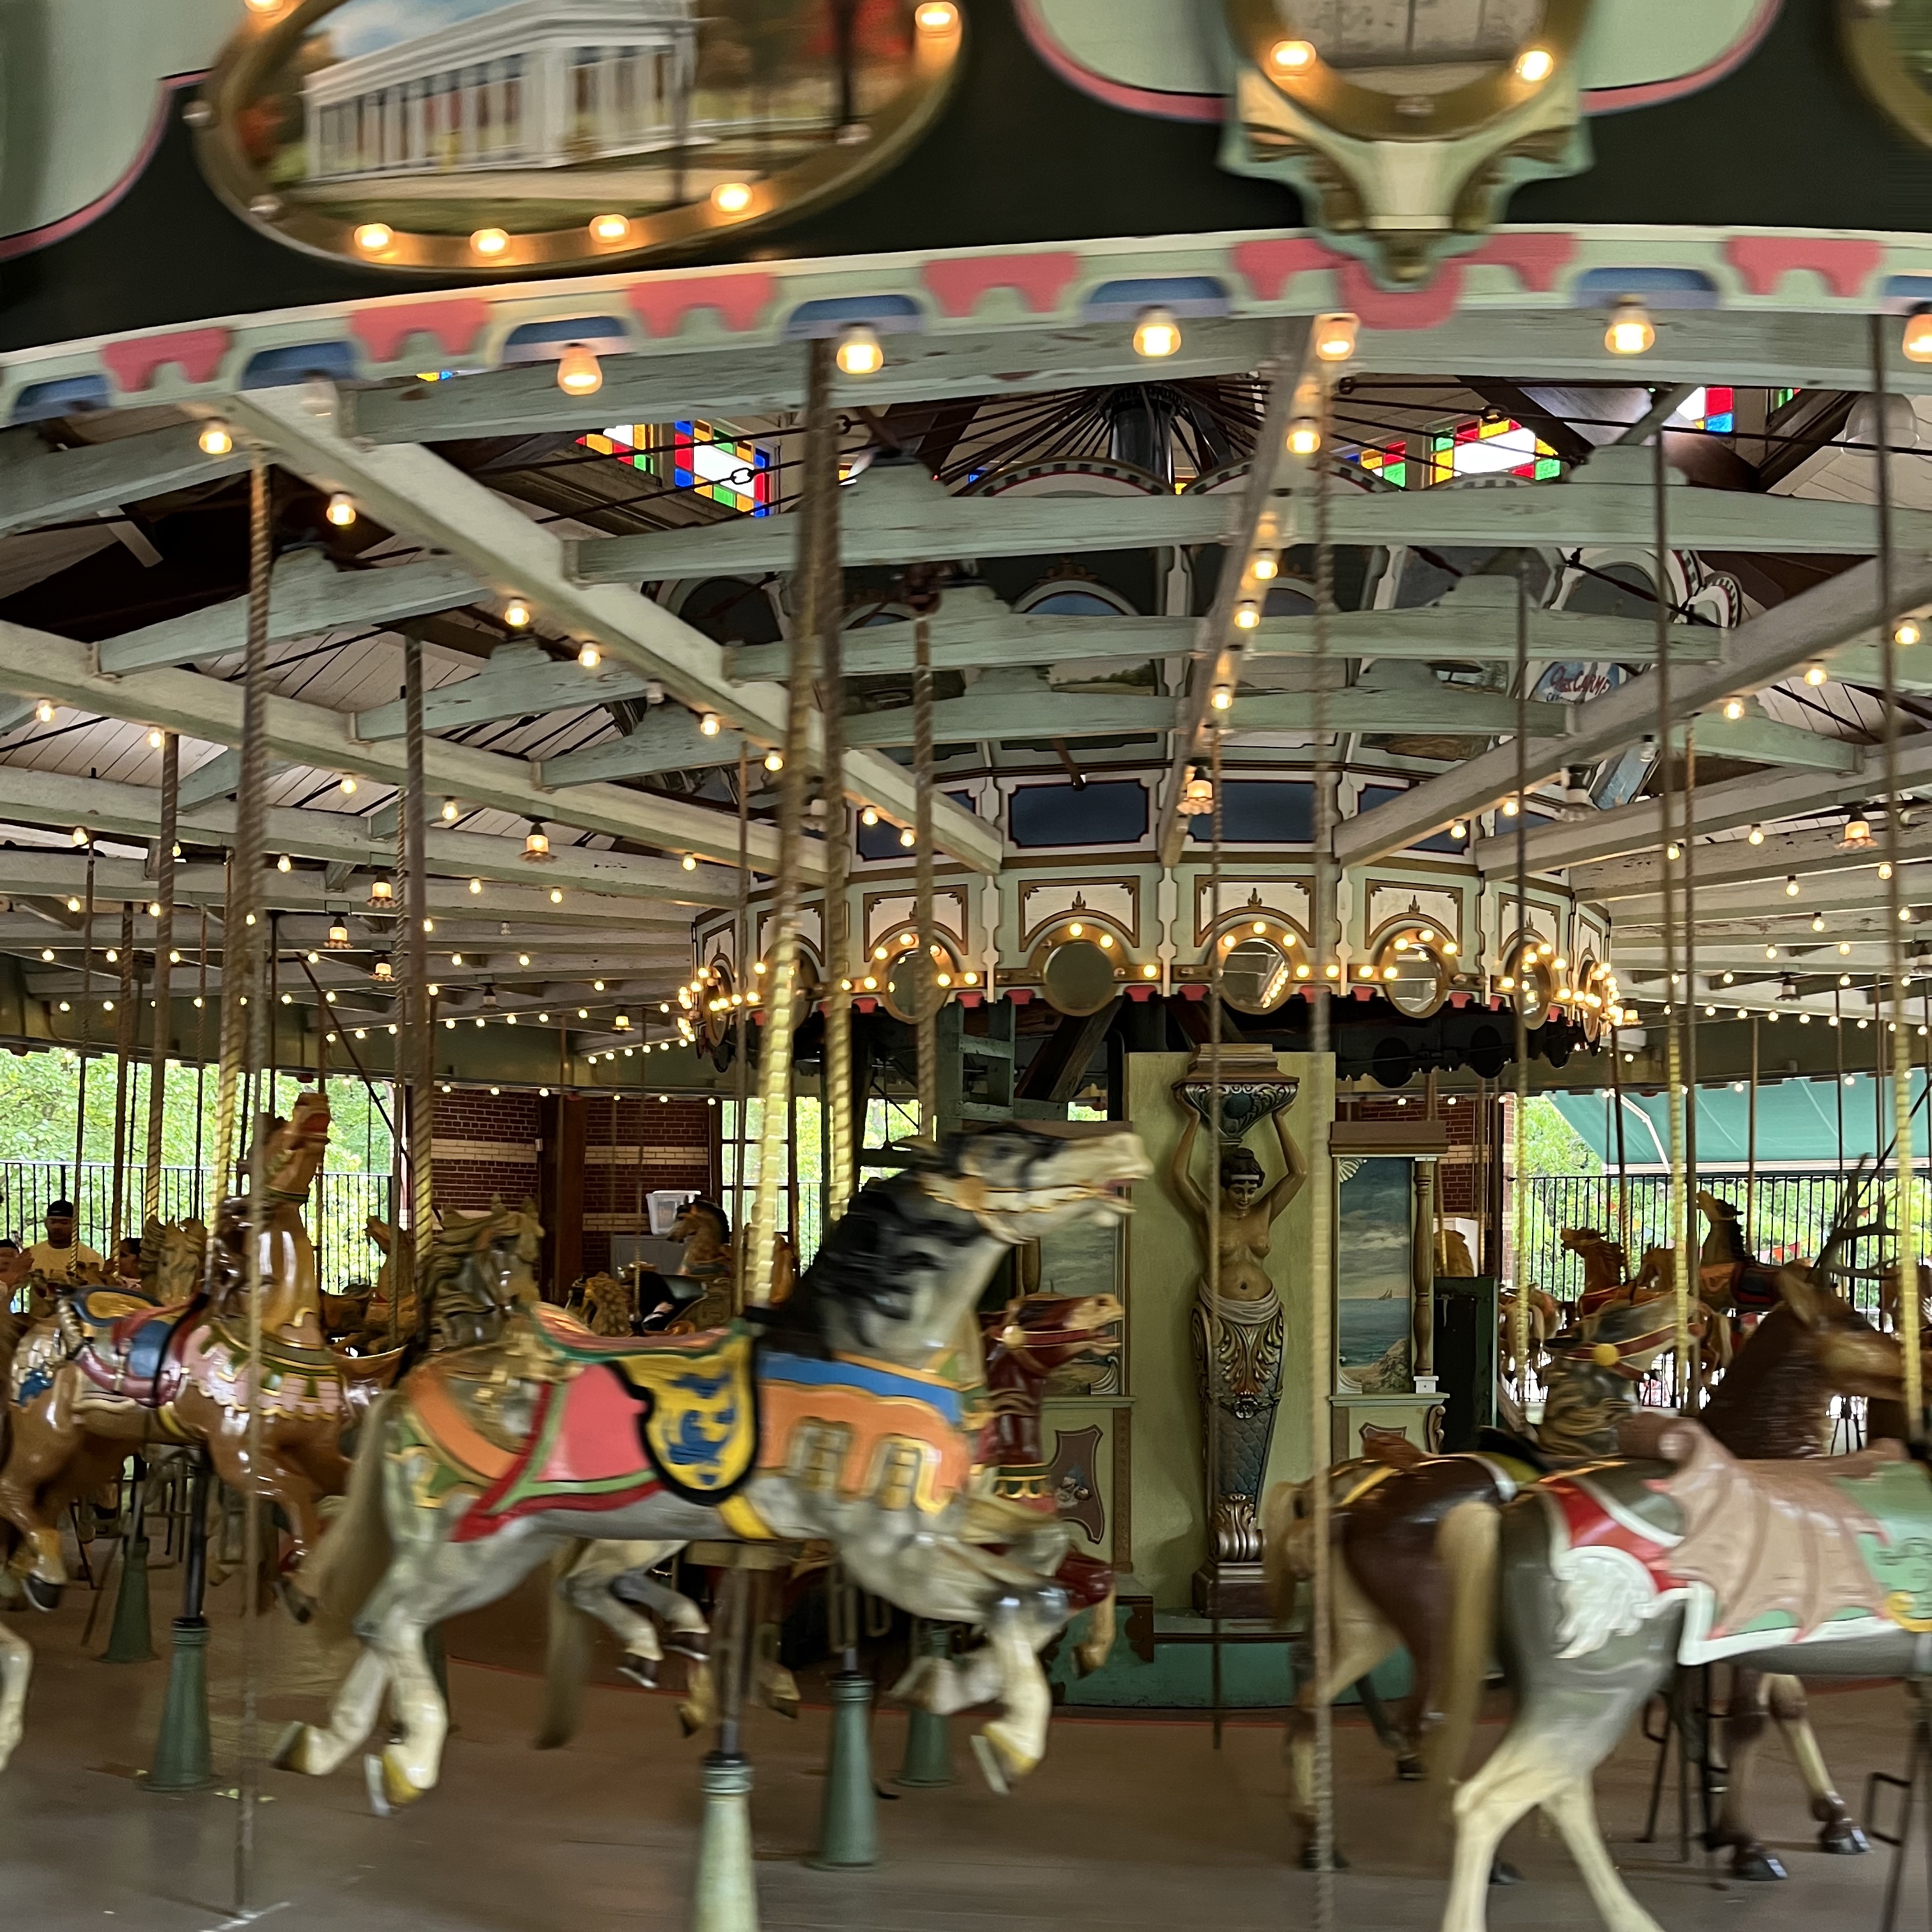 The Carousel in Prospect Park, Brooklyn.